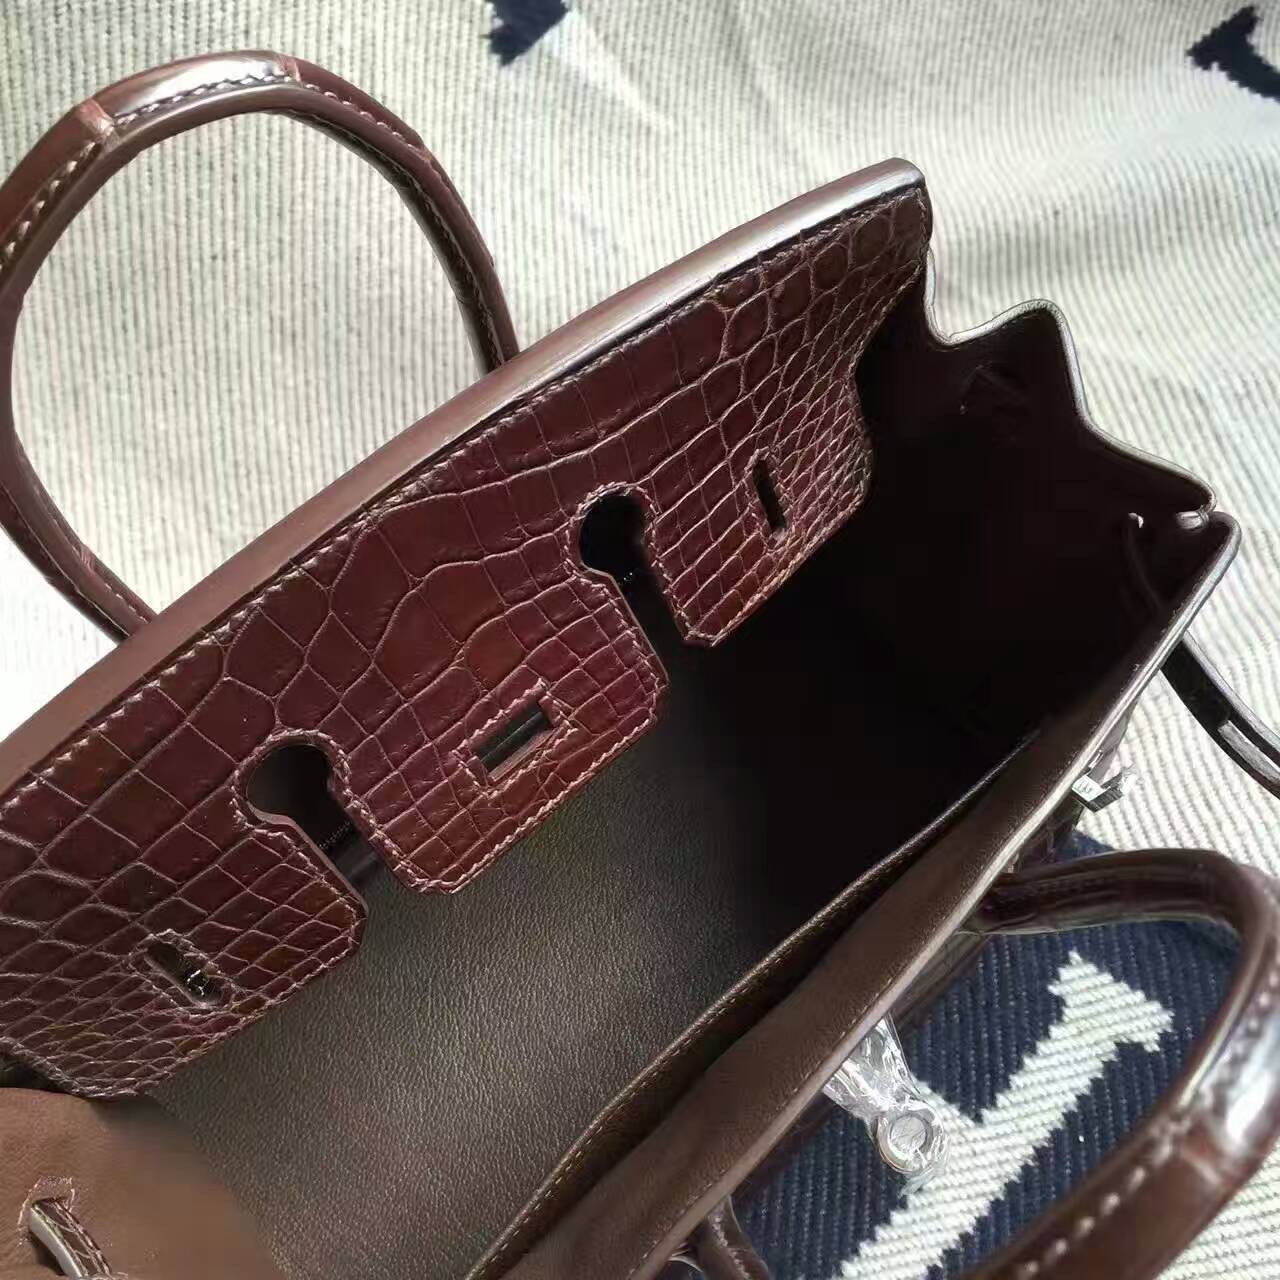 Sale Hermes Crocodile Matt Leather Birkin Bag 25cm in Chocolate Color